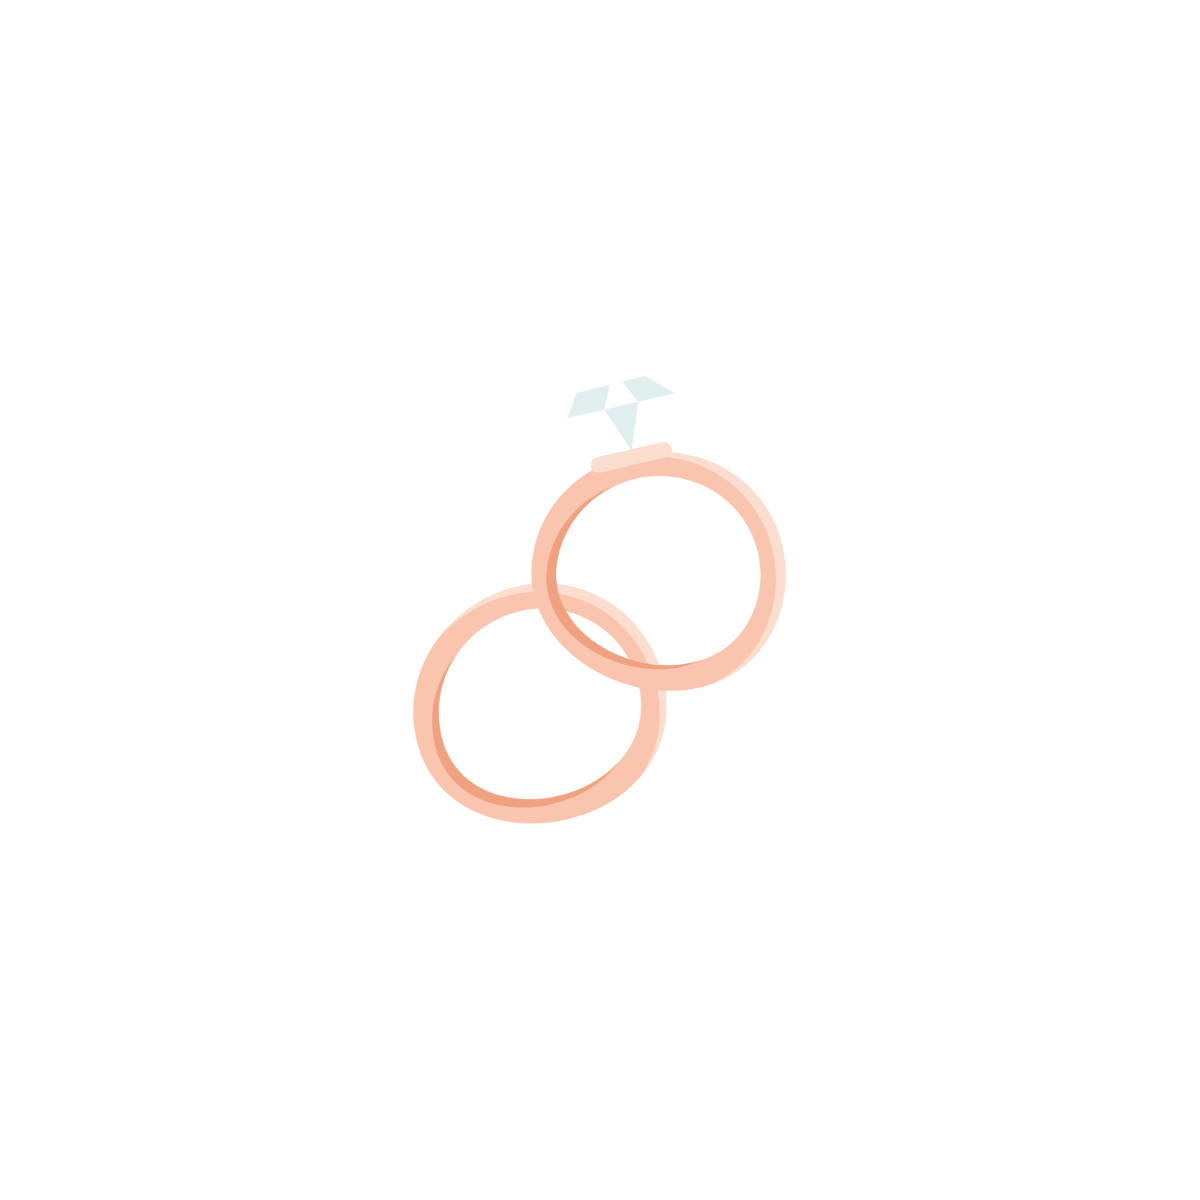 Free Wedding Ring Illustration Template